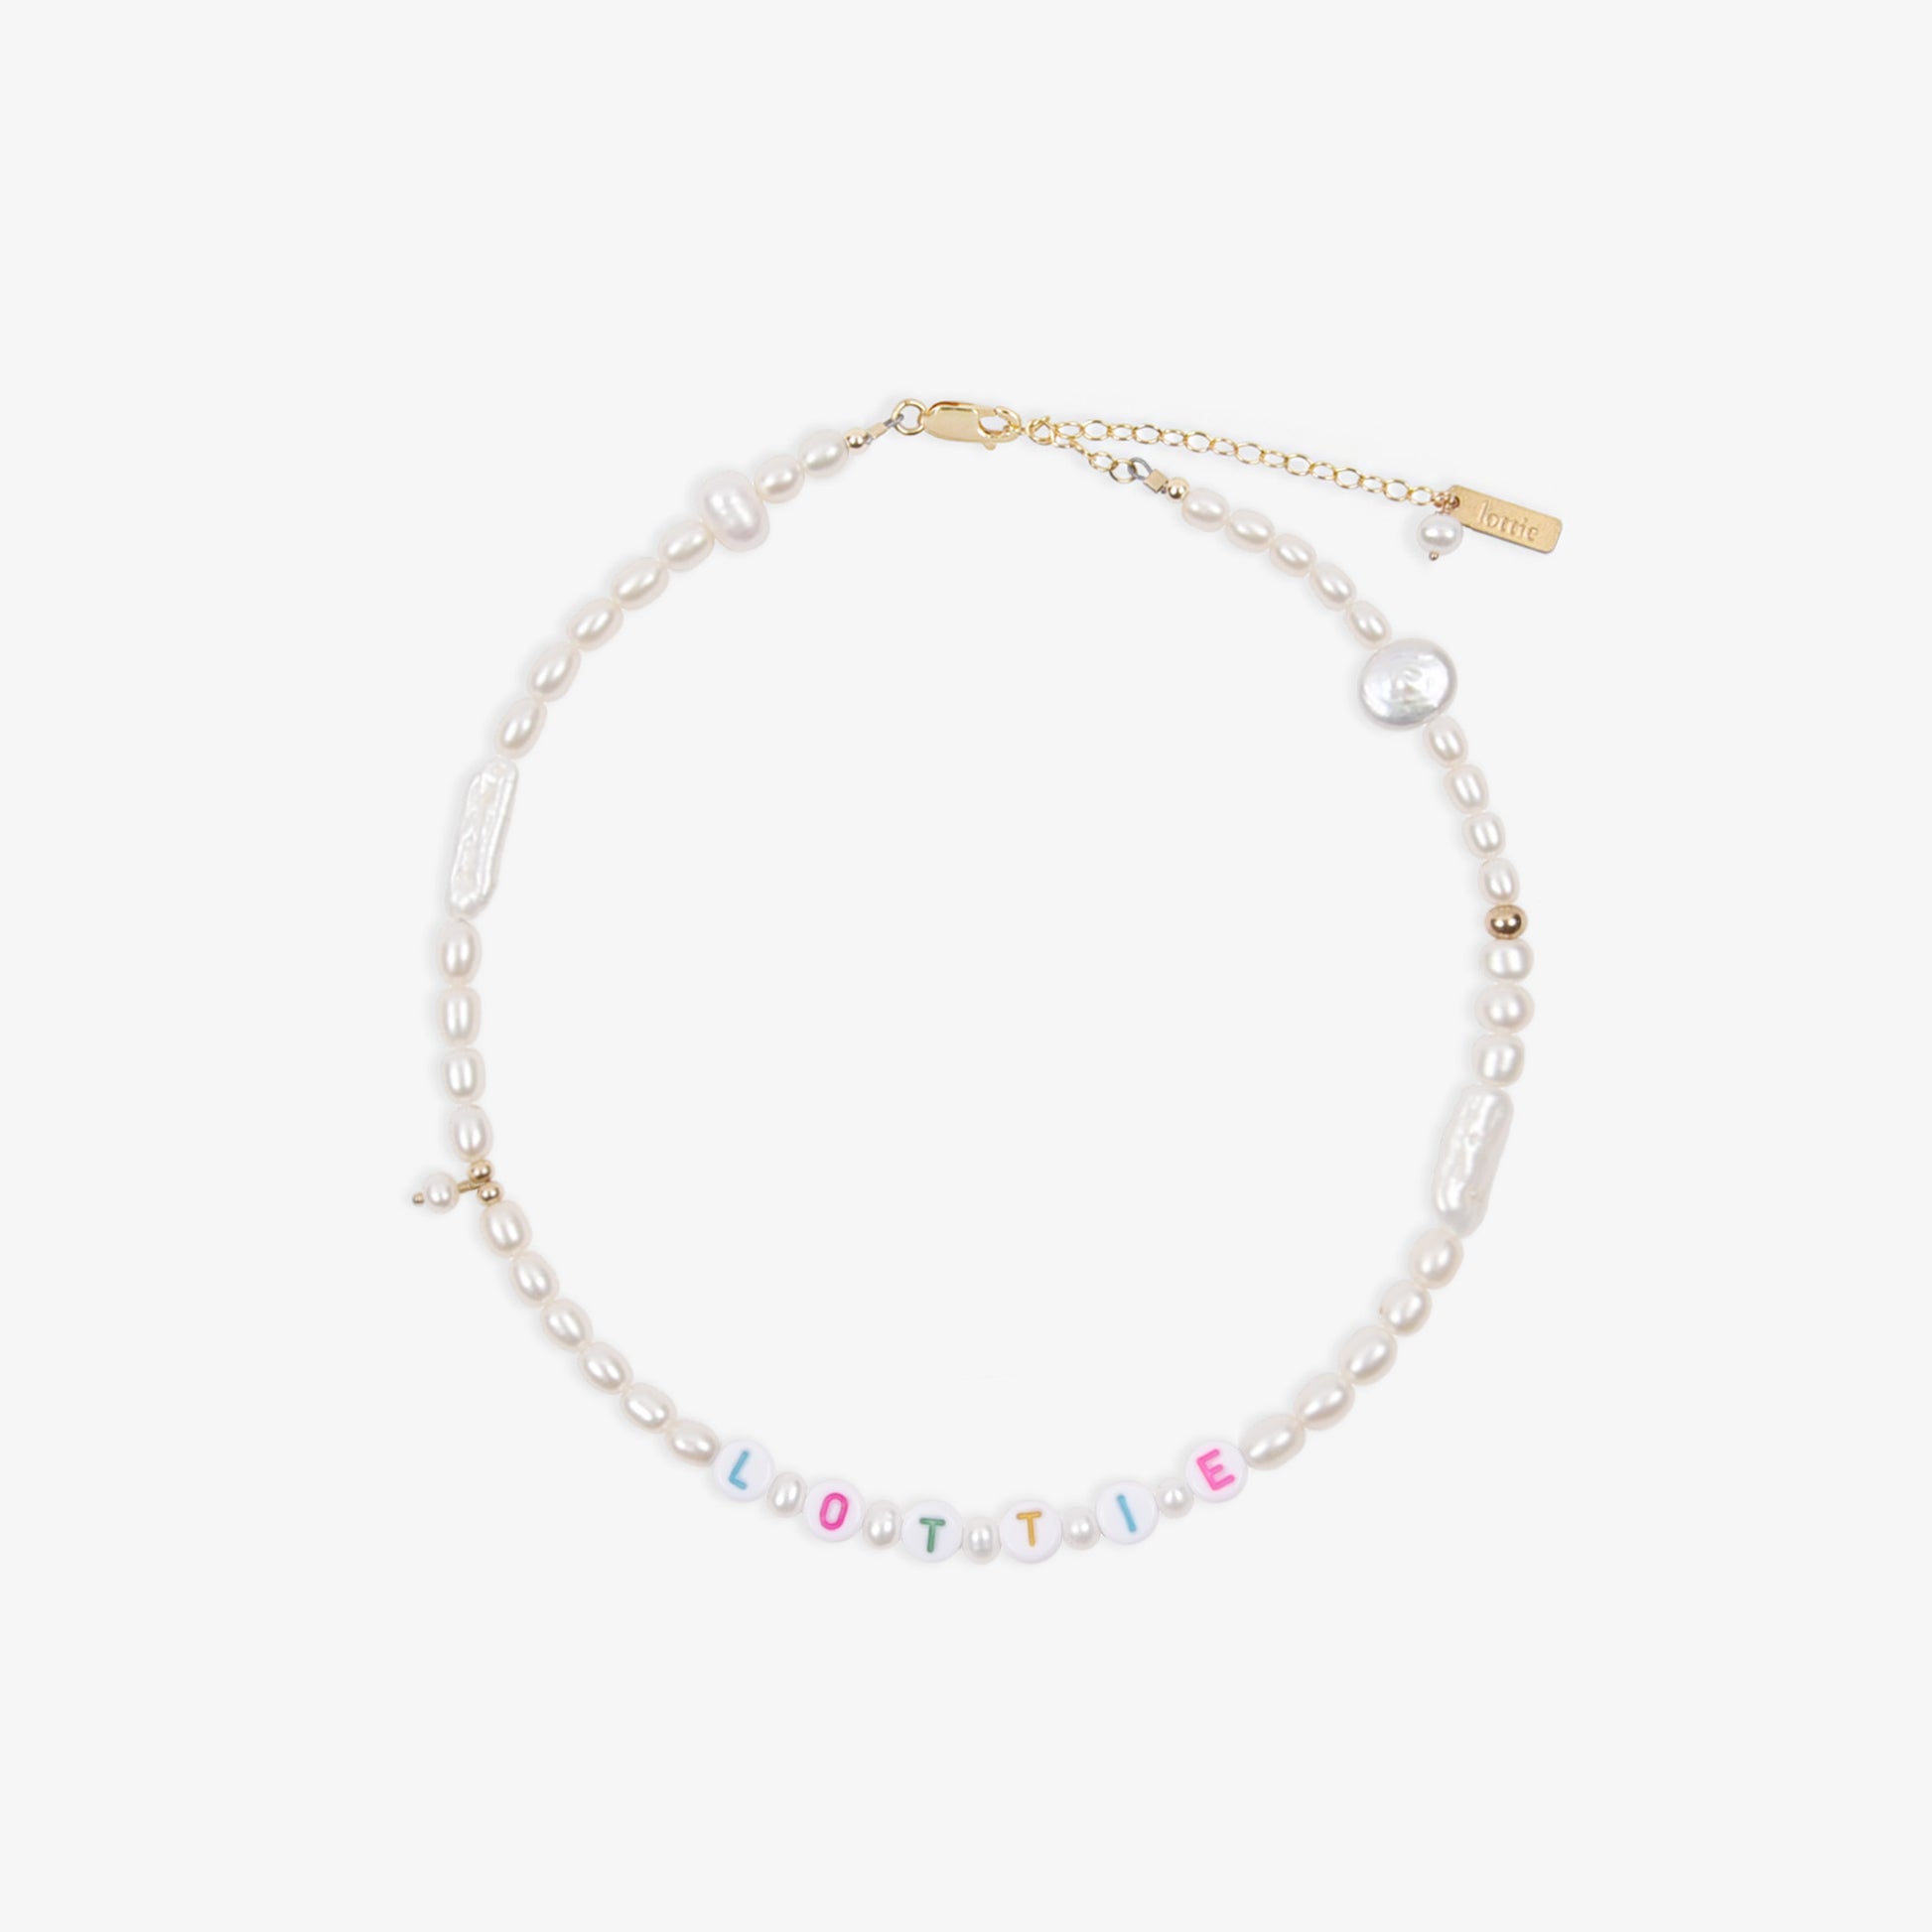 customizable pearl necklace, gigi hadid necklace, harper's bazaar necklace, gigi necklace